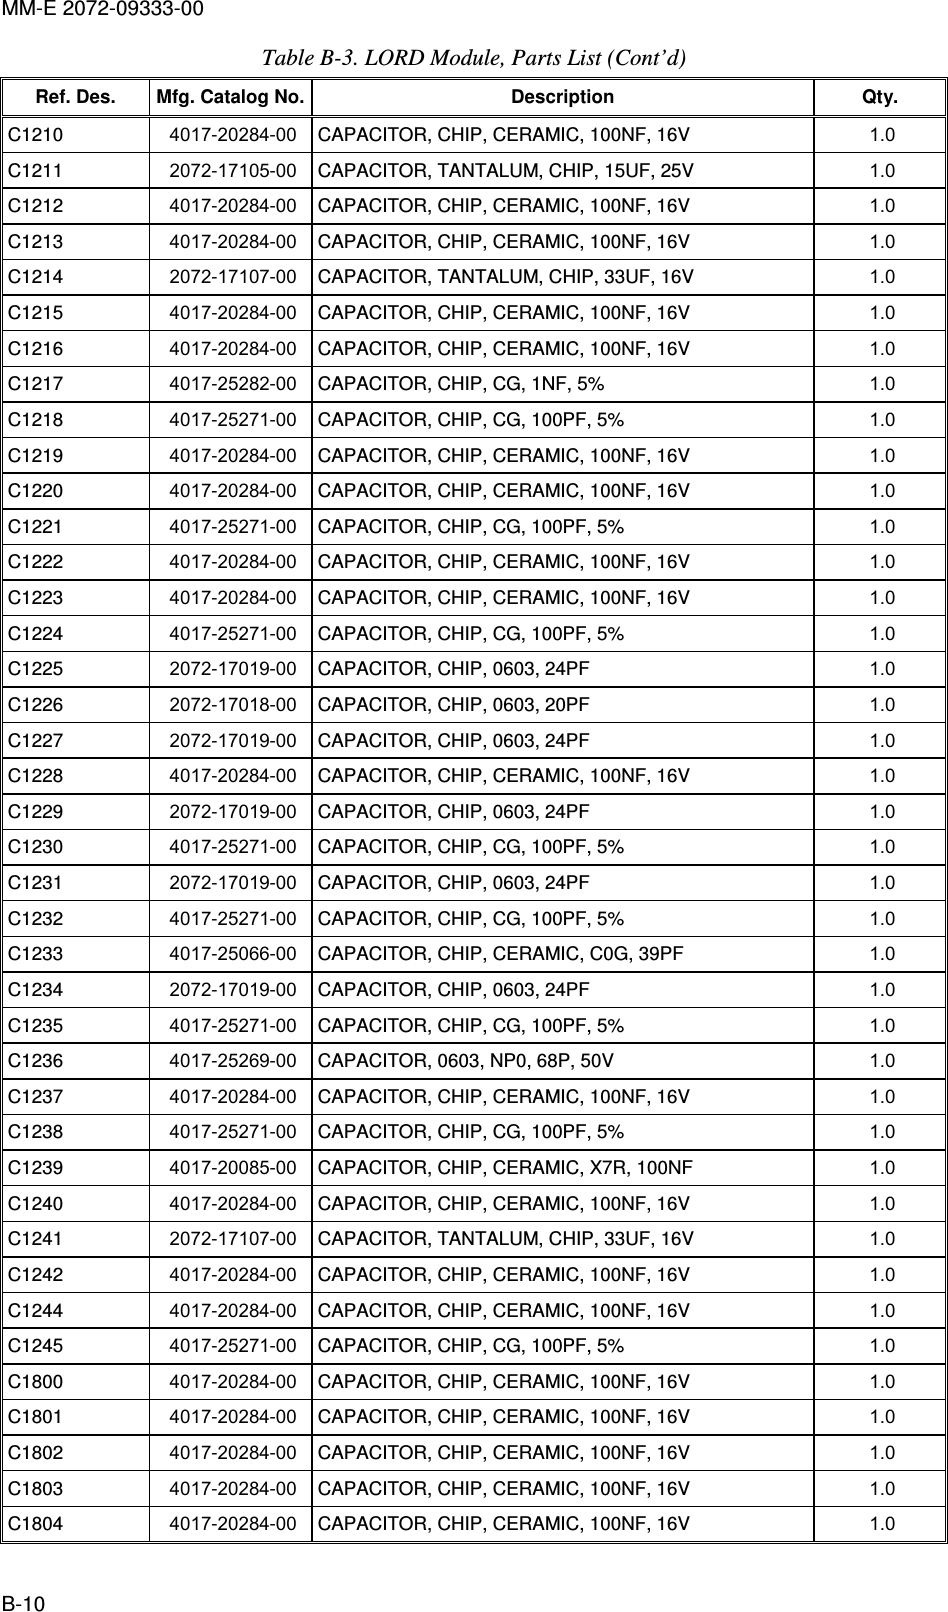 MM-E 2072-09333-00 B-10 Table  B-3. LORD Module, Parts List (Cont’d) Ref. Des.  Mfg. Catalog No. Description  Qty. C1210   4017-20284-00  CAPACITOR, CHIP, CERAMIC, 100NF, 16V  1.0   C1211   2072-17105-00  CAPACITOR, TANTALUM, CHIP, 15UF, 25V  1.0   C1212   4017-20284-00  CAPACITOR, CHIP, CERAMIC, 100NF, 16V  1.0   C1213   4017-20284-00  CAPACITOR, CHIP, CERAMIC, 100NF, 16V  1.0   C1214   2072-17107-00  CAPACITOR, TANTALUM, CHIP, 33UF, 16V  1.0   C1215   4017-20284-00  CAPACITOR, CHIP, CERAMIC, 100NF, 16V  1.0   C1216   4017-20284-00  CAPACITOR, CHIP, CERAMIC, 100NF, 16V  1.0   C1217   4017-25282-00  CAPACITOR, CHIP, CG, 1NF, 5%  1.0   C1218   4017-25271-00  CAPACITOR, CHIP, CG, 100PF, 5%  1.0   C1219   4017-20284-00  CAPACITOR, CHIP, CERAMIC, 100NF, 16V  1.0   C1220   4017-20284-00  CAPACITOR, CHIP, CERAMIC, 100NF, 16V  1.0   C1221   4017-25271-00  CAPACITOR, CHIP, CG, 100PF, 5%  1.0   C1222   4017-20284-00  CAPACITOR, CHIP, CERAMIC, 100NF, 16V  1.0   C1223   4017-20284-00  CAPACITOR, CHIP, CERAMIC, 100NF, 16V  1.0   C1224   4017-25271-00  CAPACITOR, CHIP, CG, 100PF, 5%  1.0   C1225   2072-17019-00  CAPACITOR, CHIP, 0603, 24PF  1.0   C1226   2072-17018-00  CAPACITOR, CHIP, 0603, 20PF  1.0   C1227   2072-17019-00  CAPACITOR, CHIP, 0603, 24PF  1.0   C1228   4017-20284-00  CAPACITOR, CHIP, CERAMIC, 100NF, 16V  1.0   C1229   2072-17019-00  CAPACITOR, CHIP, 0603, 24PF  1.0   C1230   4017-25271-00  CAPACITOR, CHIP, CG, 100PF, 5%  1.0   C1231   2072-17019-00  CAPACITOR, CHIP, 0603, 24PF  1.0   C1232   4017-25271-00  CAPACITOR, CHIP, CG, 100PF, 5%  1.0   C1233   4017-25066-00  CAPACITOR, CHIP, CERAMIC, C0G, 39PF  1.0   C1234   2072-17019-00  CAPACITOR, CHIP, 0603, 24PF  1.0   C1235   4017-25271-00  CAPACITOR, CHIP, CG, 100PF, 5%  1.0   C1236   4017-25269-00  CAPACITOR, 0603, NP0, 68P, 50V  1.0   C1237   4017-20284-00  CAPACITOR, CHIP, CERAMIC, 100NF, 16V  1.0   C1238   4017-25271-00  CAPACITOR, CHIP, CG, 100PF, 5%  1.0   C1239   4017-20085-00  CAPACITOR, CHIP, CERAMIC, X7R, 100NF  1.0   C1240   4017-20284-00  CAPACITOR, CHIP, CERAMIC, 100NF, 16V  1.0   C1241   2072-17107-00  CAPACITOR, TANTALUM, CHIP, 33UF, 16V  1.0   C1242   4017-20284-00  CAPACITOR, CHIP, CERAMIC, 100NF, 16V  1.0   C1244   4017-20284-00  CAPACITOR, CHIP, CERAMIC, 100NF, 16V  1.0   C1245   4017-25271-00  CAPACITOR, CHIP, CG, 100PF, 5%  1.0   C1800   4017-20284-00  CAPACITOR, CHIP, CERAMIC, 100NF, 16V  1.0   C1801   4017-20284-00  CAPACITOR, CHIP, CERAMIC, 100NF, 16V  1.0   C1802   4017-20284-00  CAPACITOR, CHIP, CERAMIC, 100NF, 16V  1.0   C1803   4017-20284-00  CAPACITOR, CHIP, CERAMIC, 100NF, 16V  1.0   C1804   4017-20284-00  CAPACITOR, CHIP, CERAMIC, 100NF, 16V  1.0   